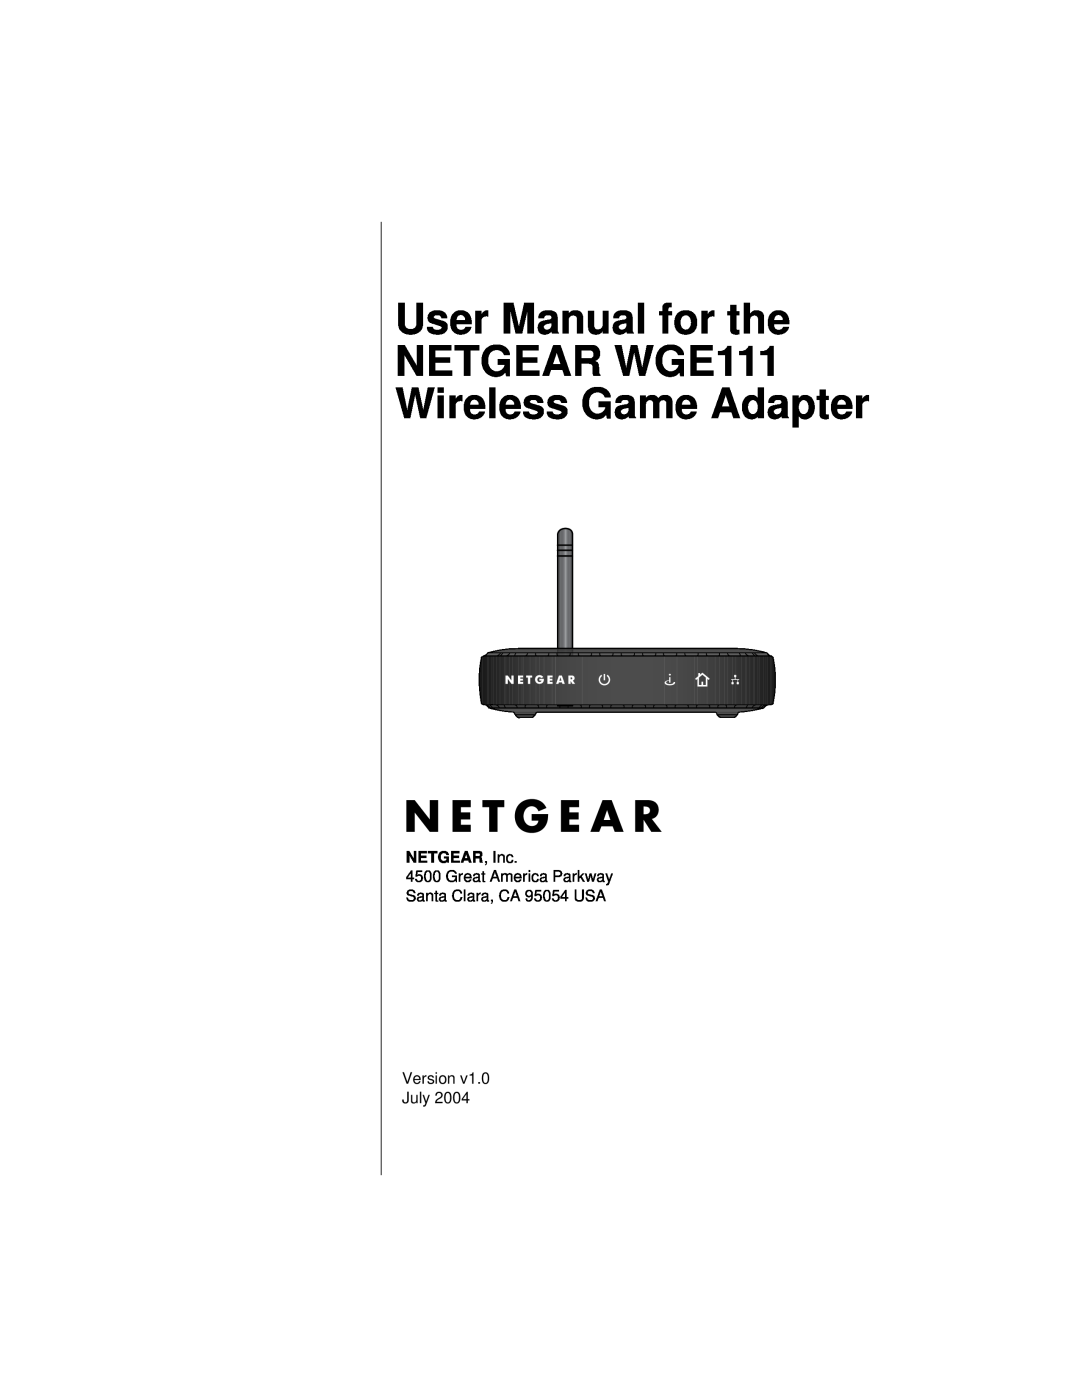 NETGEAR user manual User Manual for the NETGEAR WGE111 Wireless Game Adapter, NETGEAR, Inc 